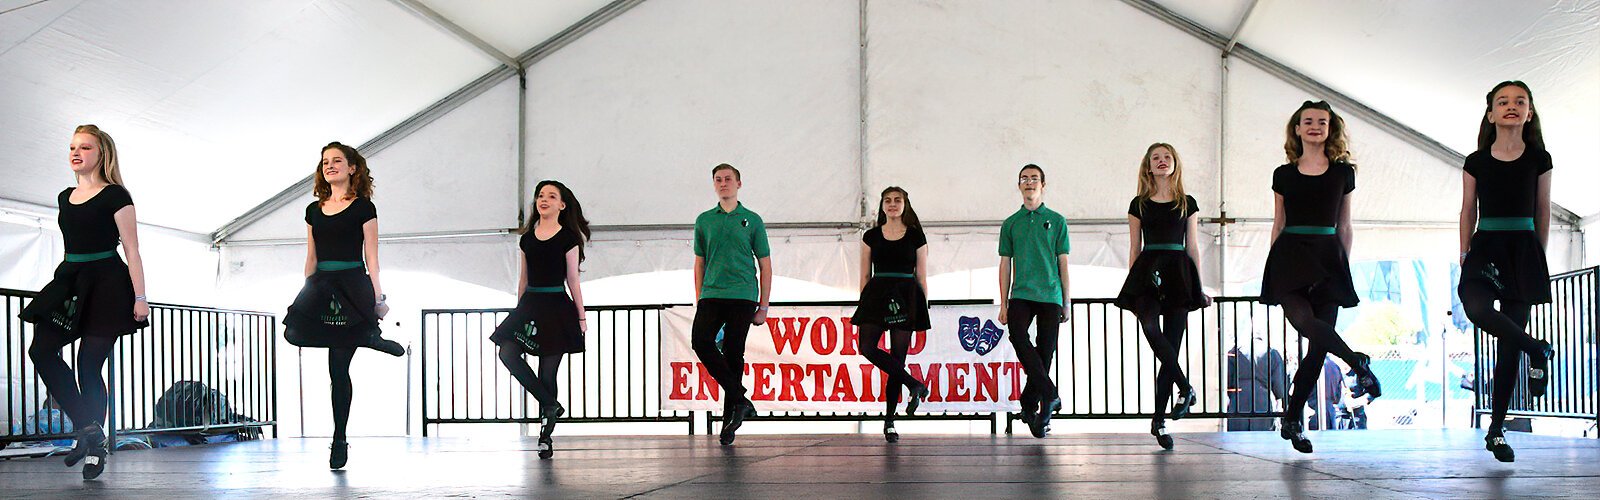  Gilleoghan Irish dancers demonstrate authentic Irish culture using very skilled feet.